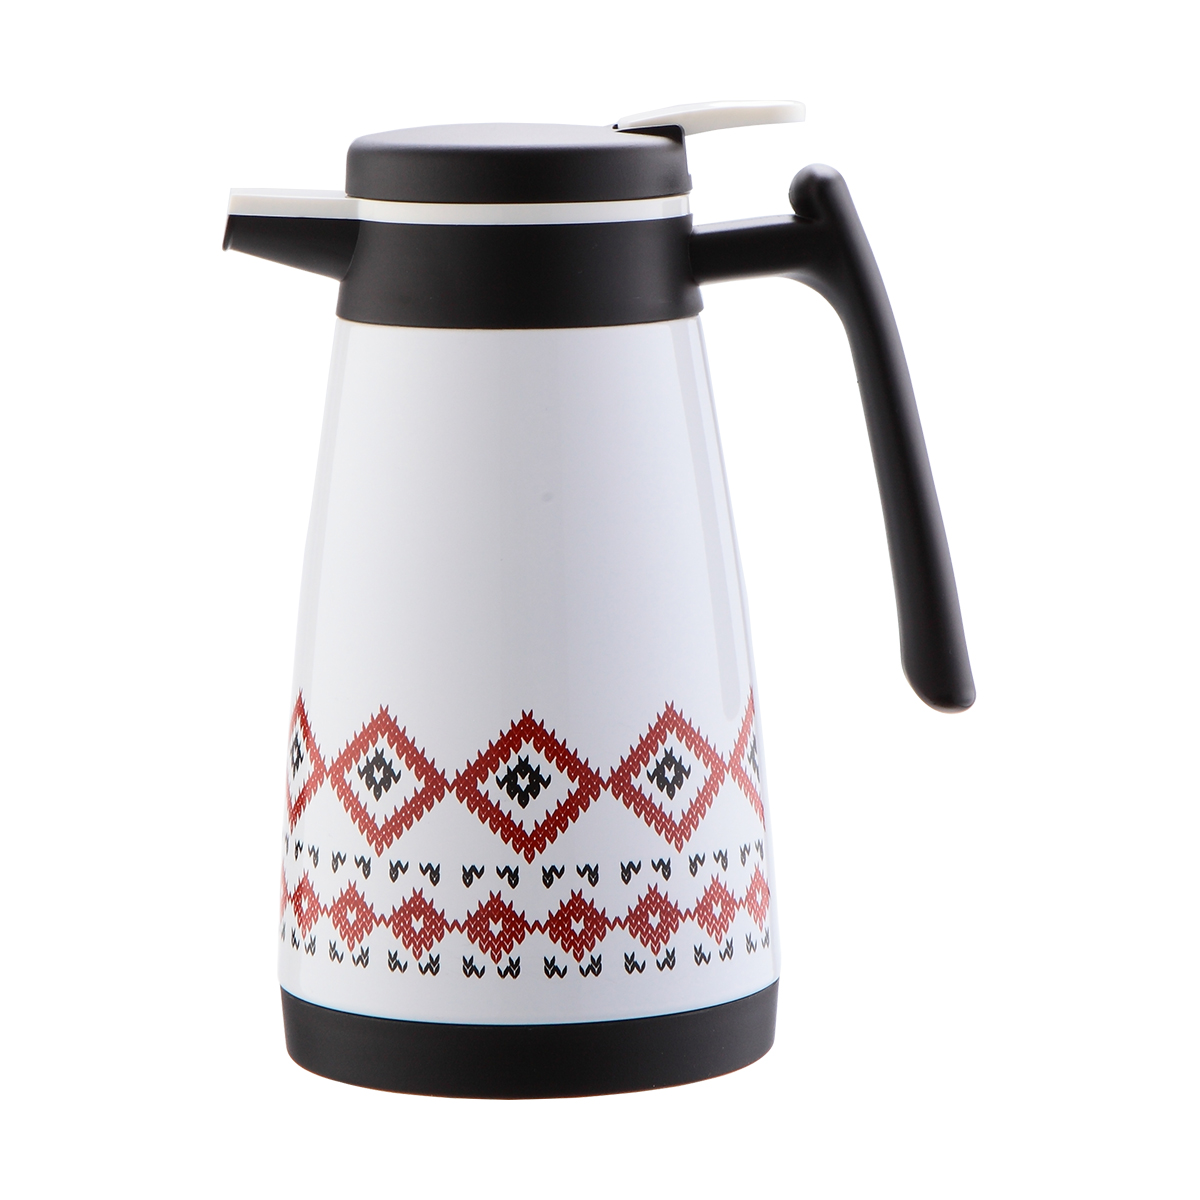 Coffee pot NWY-YH1.3